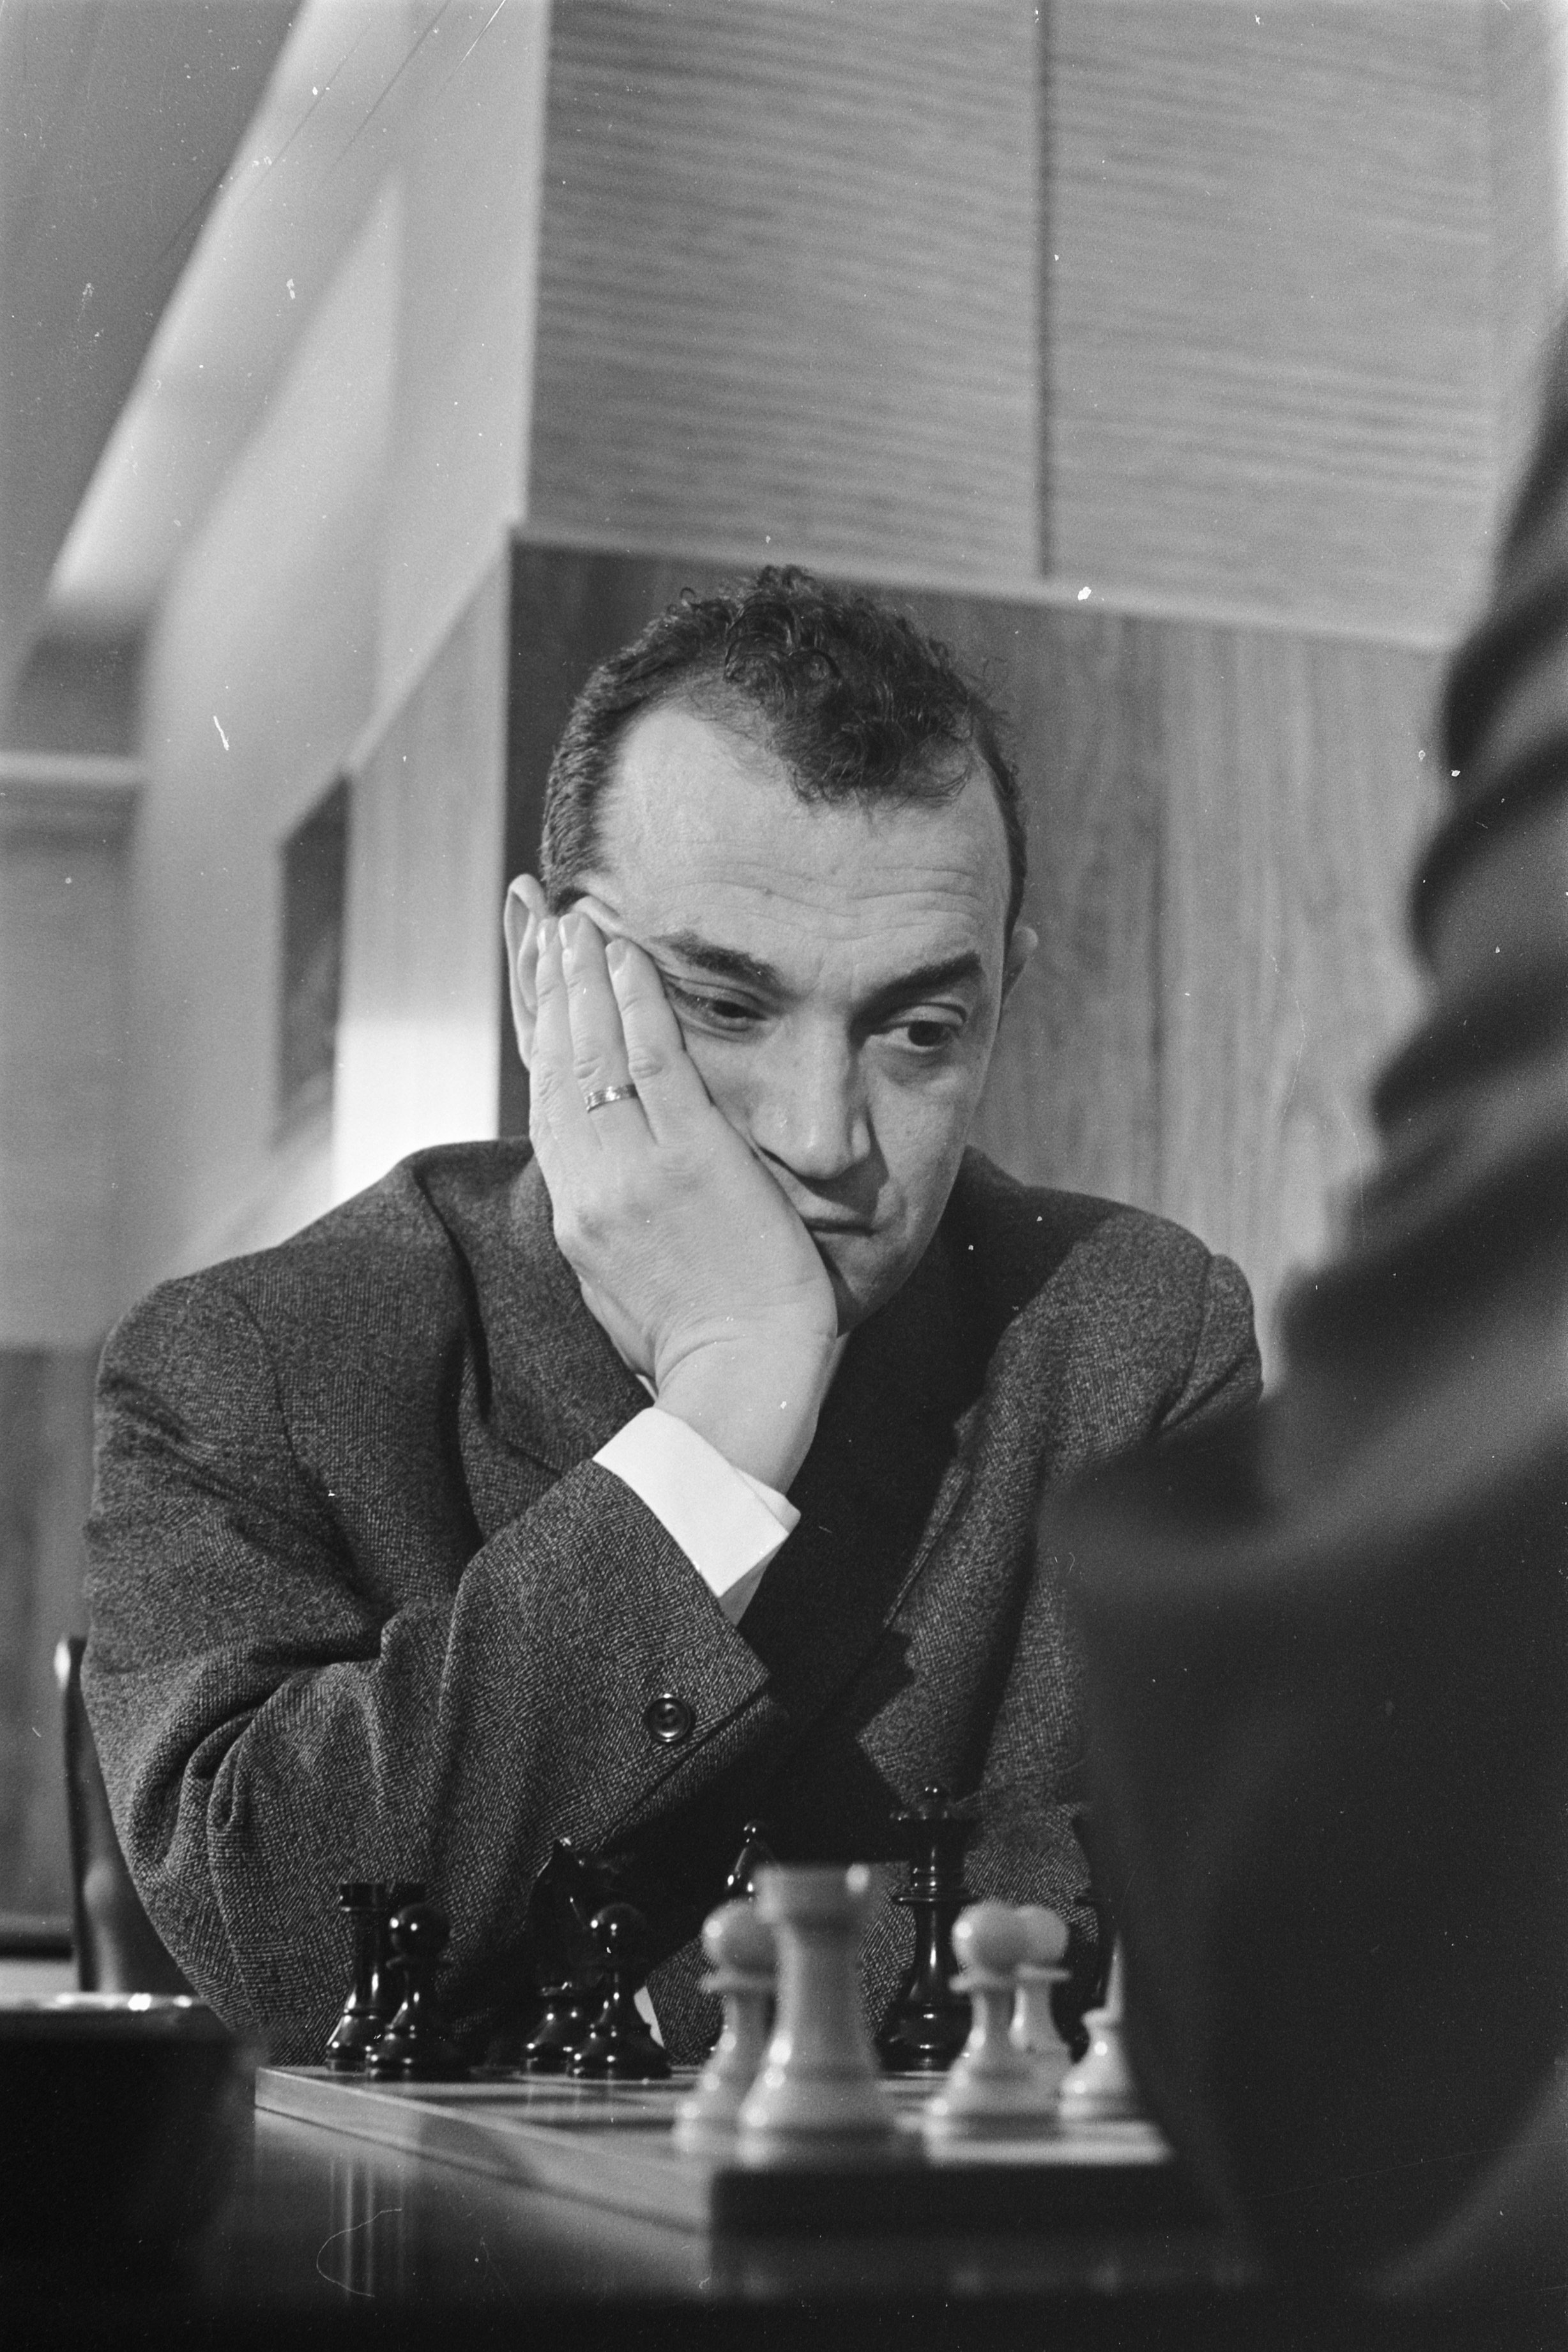 Botvinnik - Tal World Championship Match (1960) chess event